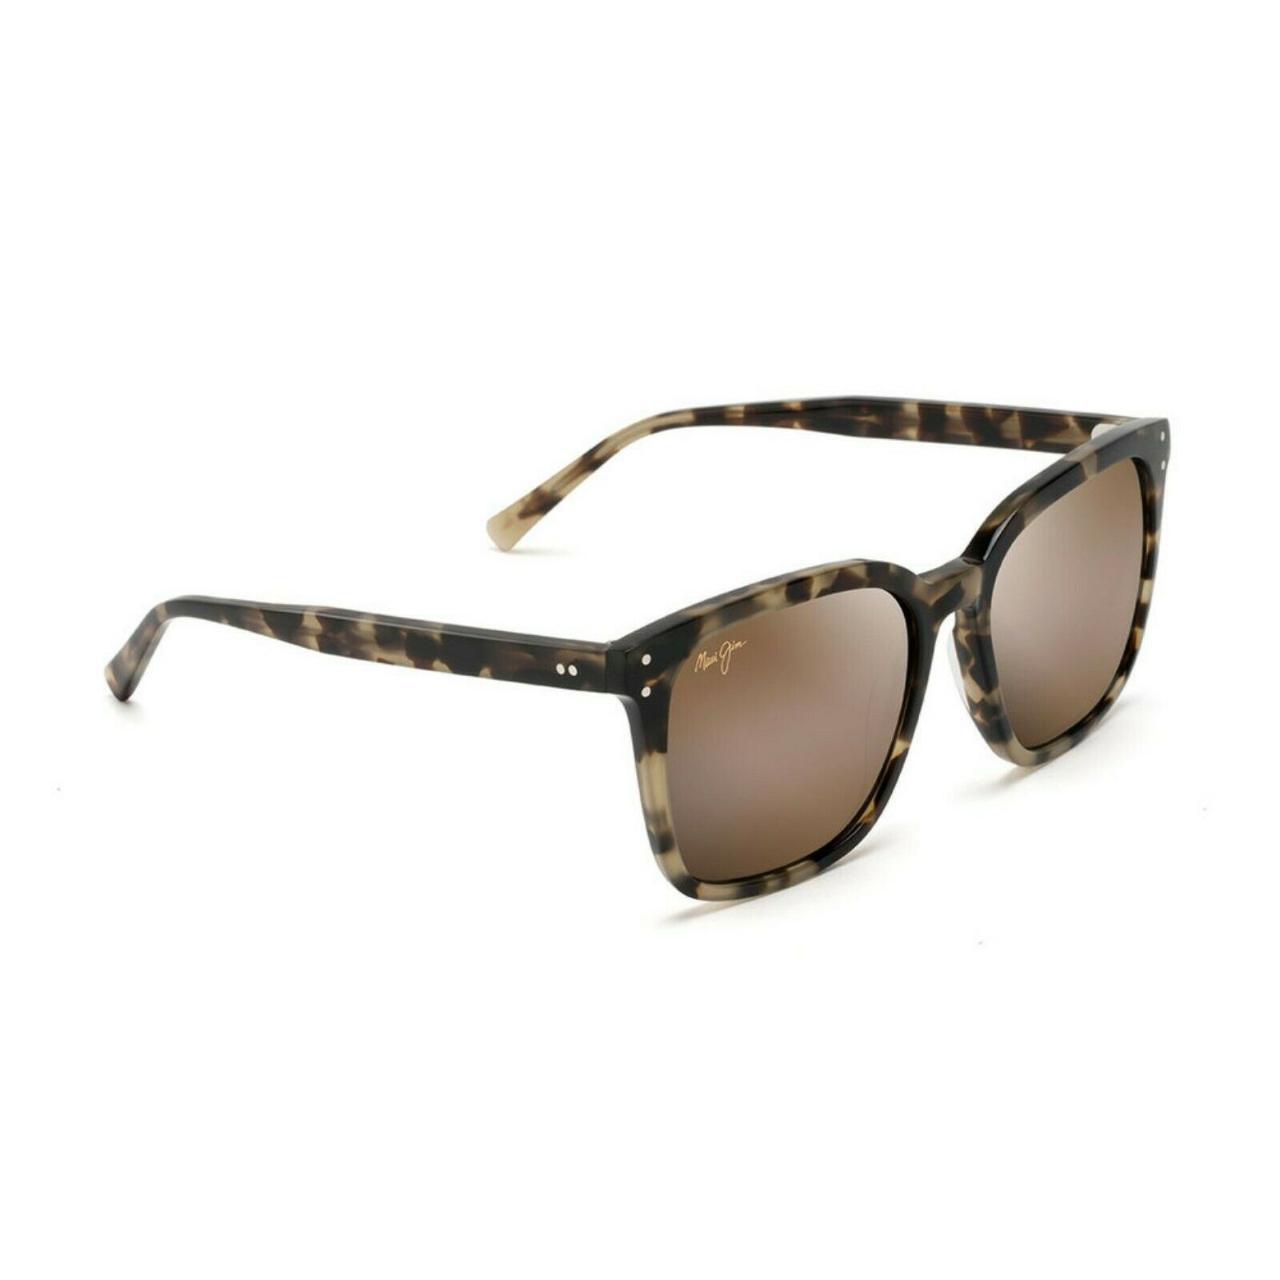 Maui Jim Westside Fashion Sunglasses - Gray Lenses With Grey Frame : Target